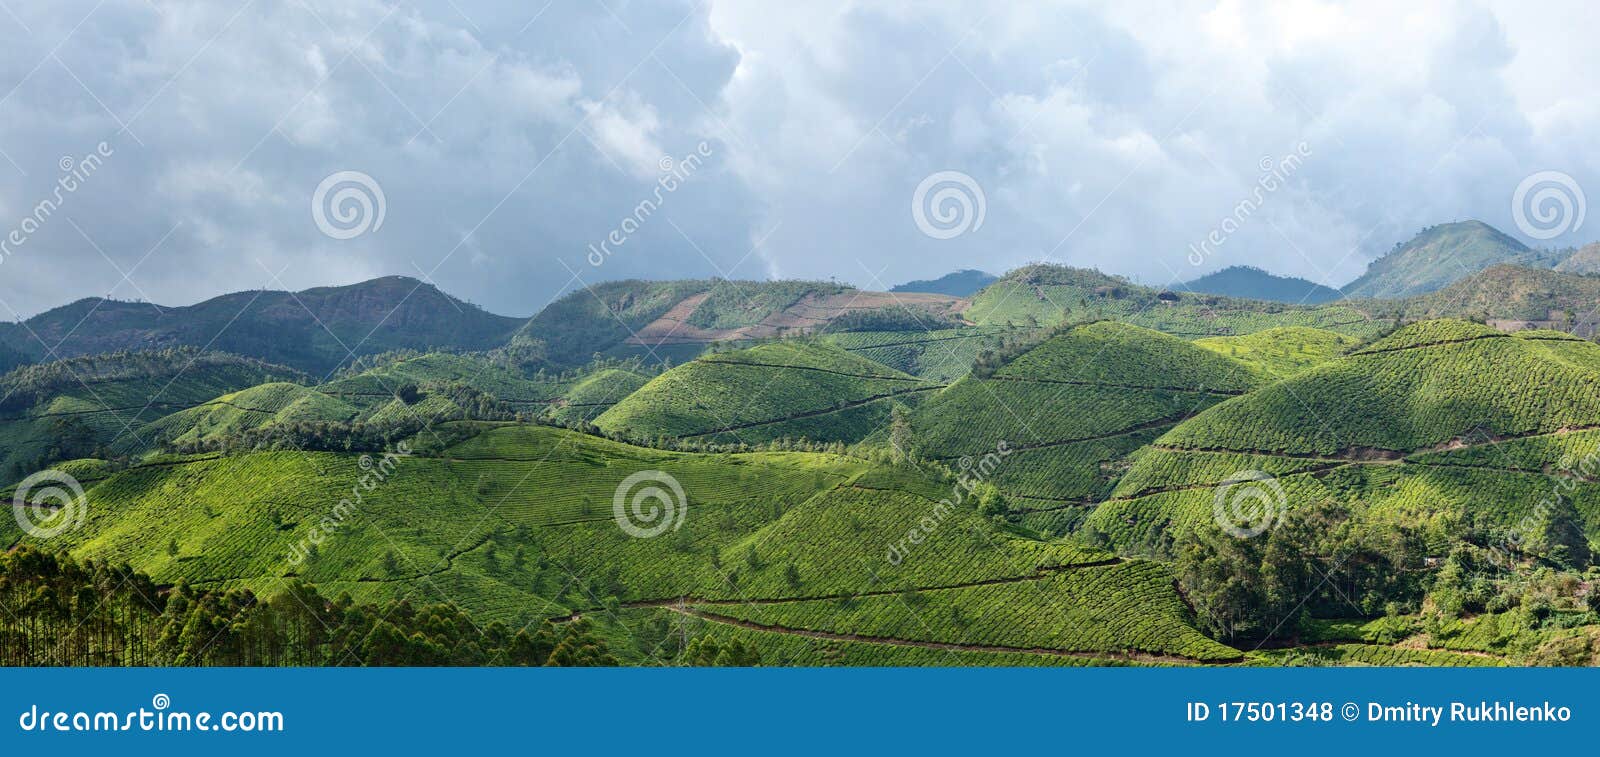 panorama of tea plantations